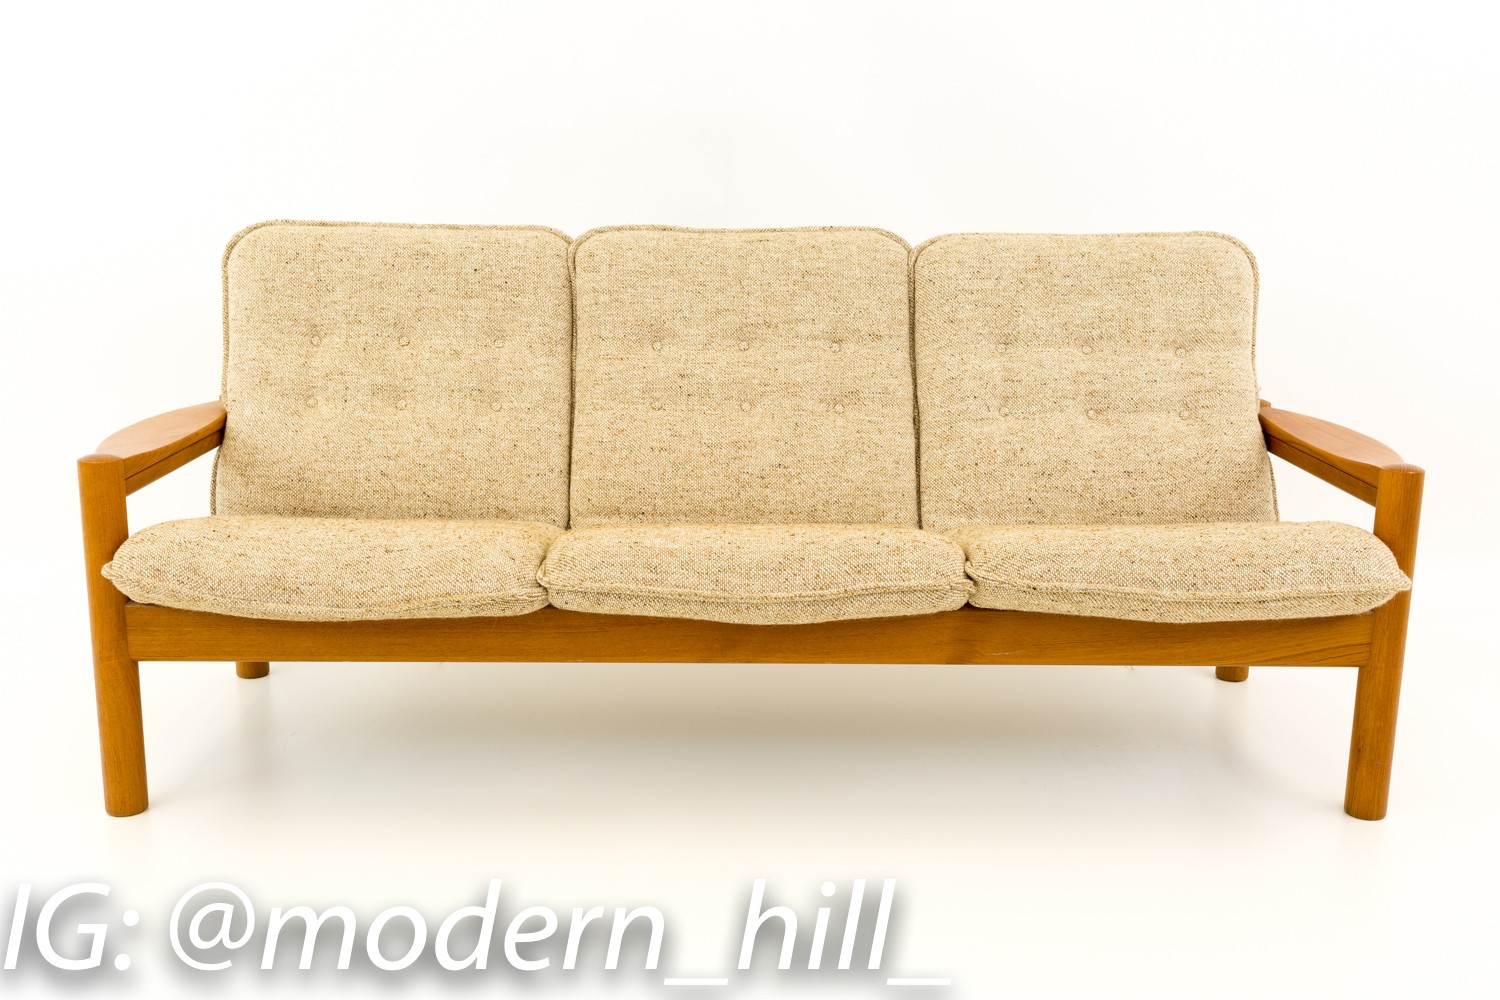 Tarm Stole Og Mobelfabrik Style Mid Century Teak Upholstered Sofa Couch by Domino Mobler